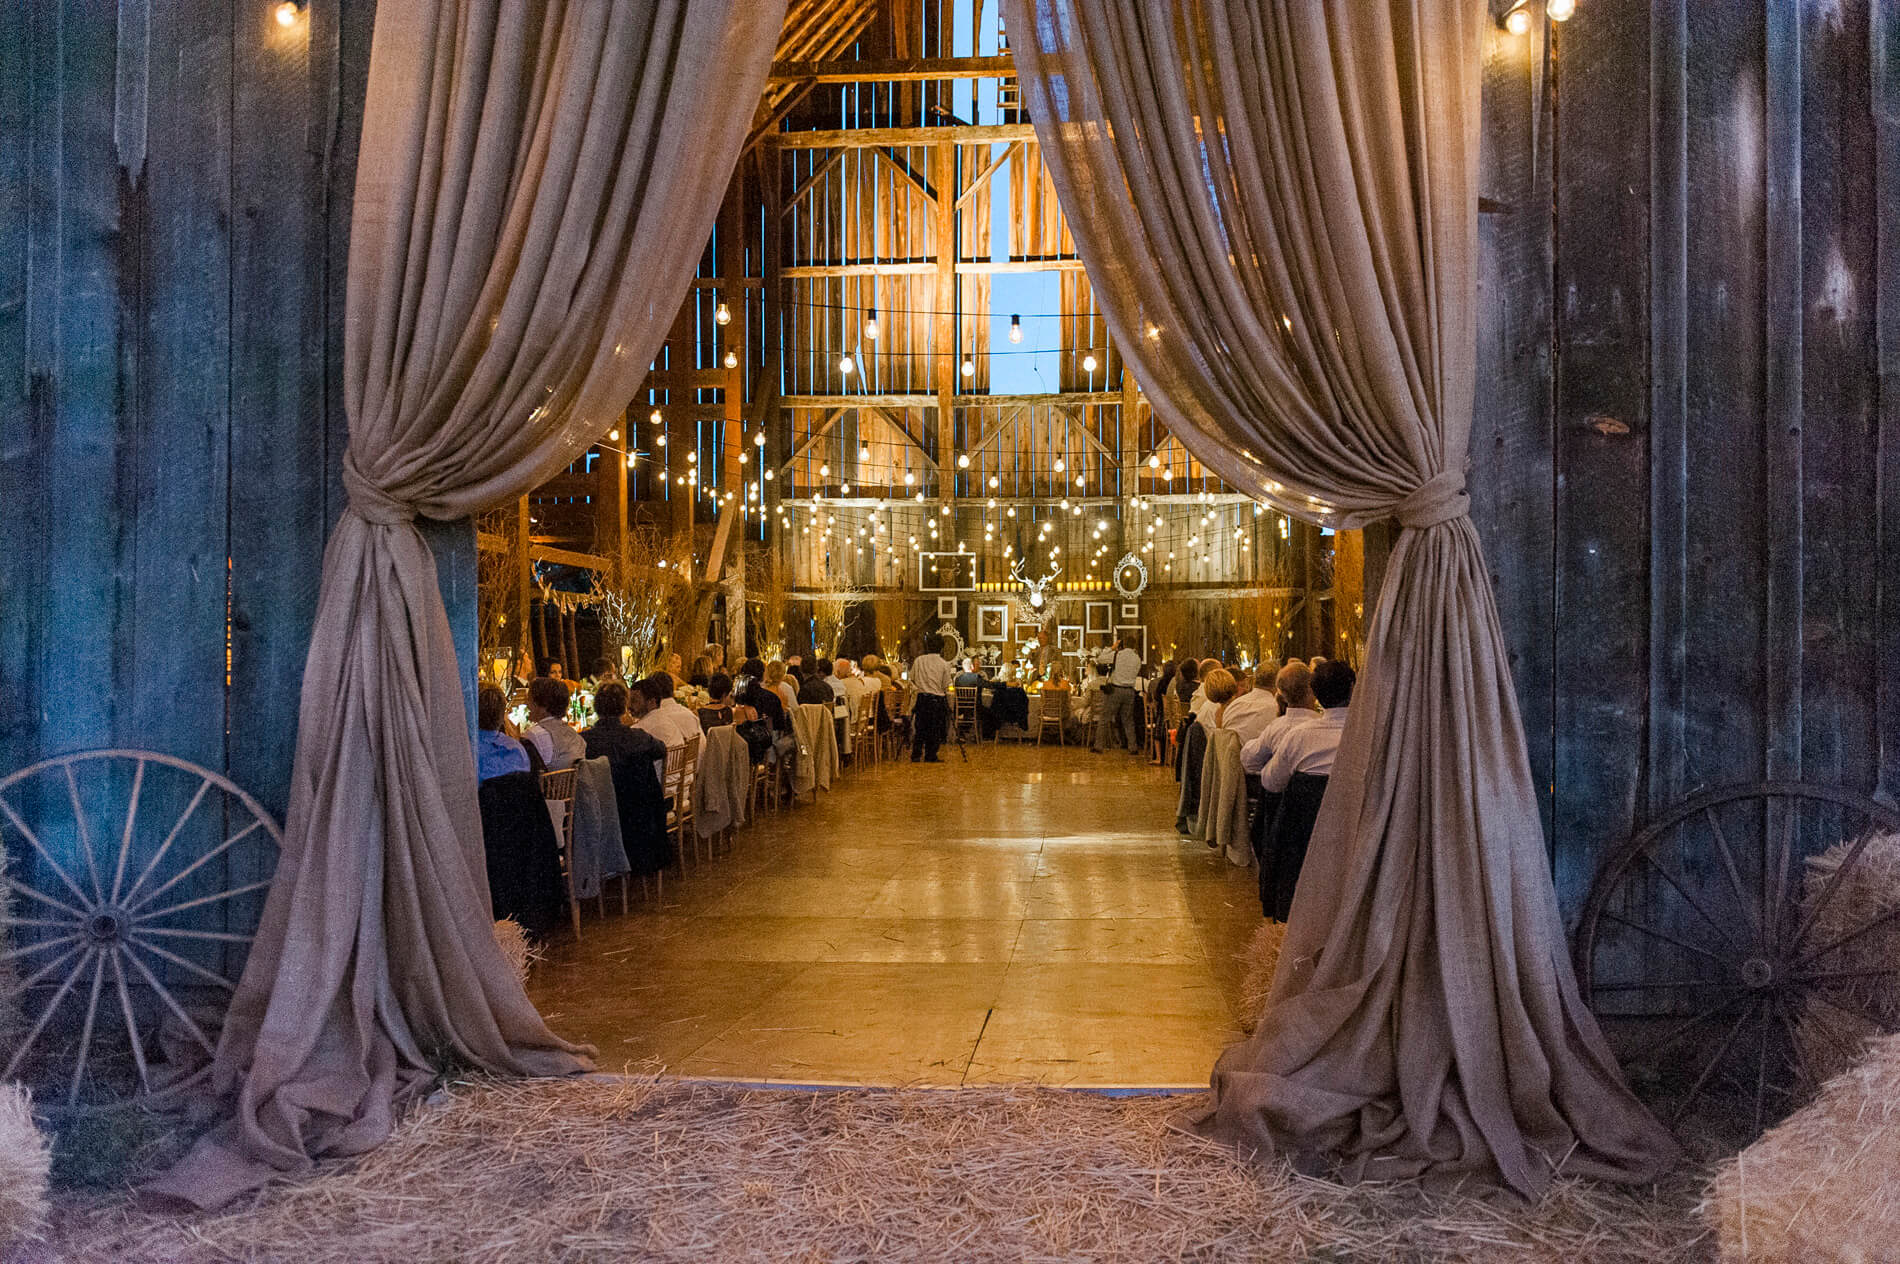 large canvas drapes framing entrance to rustic barn wedding reception